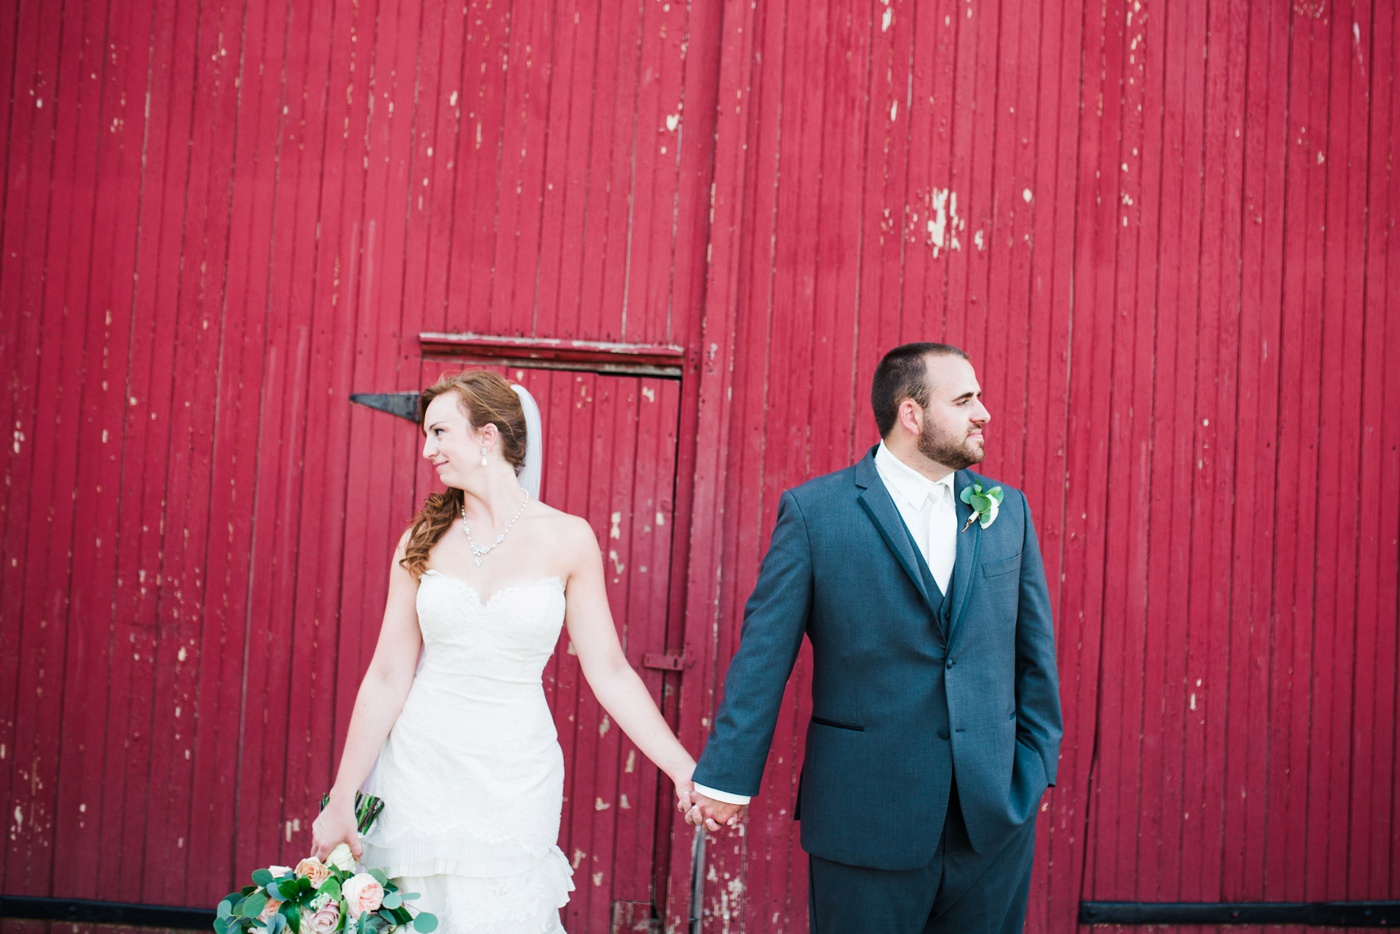 The Country Barn Loft Wedding Reception - Lancaster Pennsylvania Wedding Photographer - Alison Dunn Photography photo